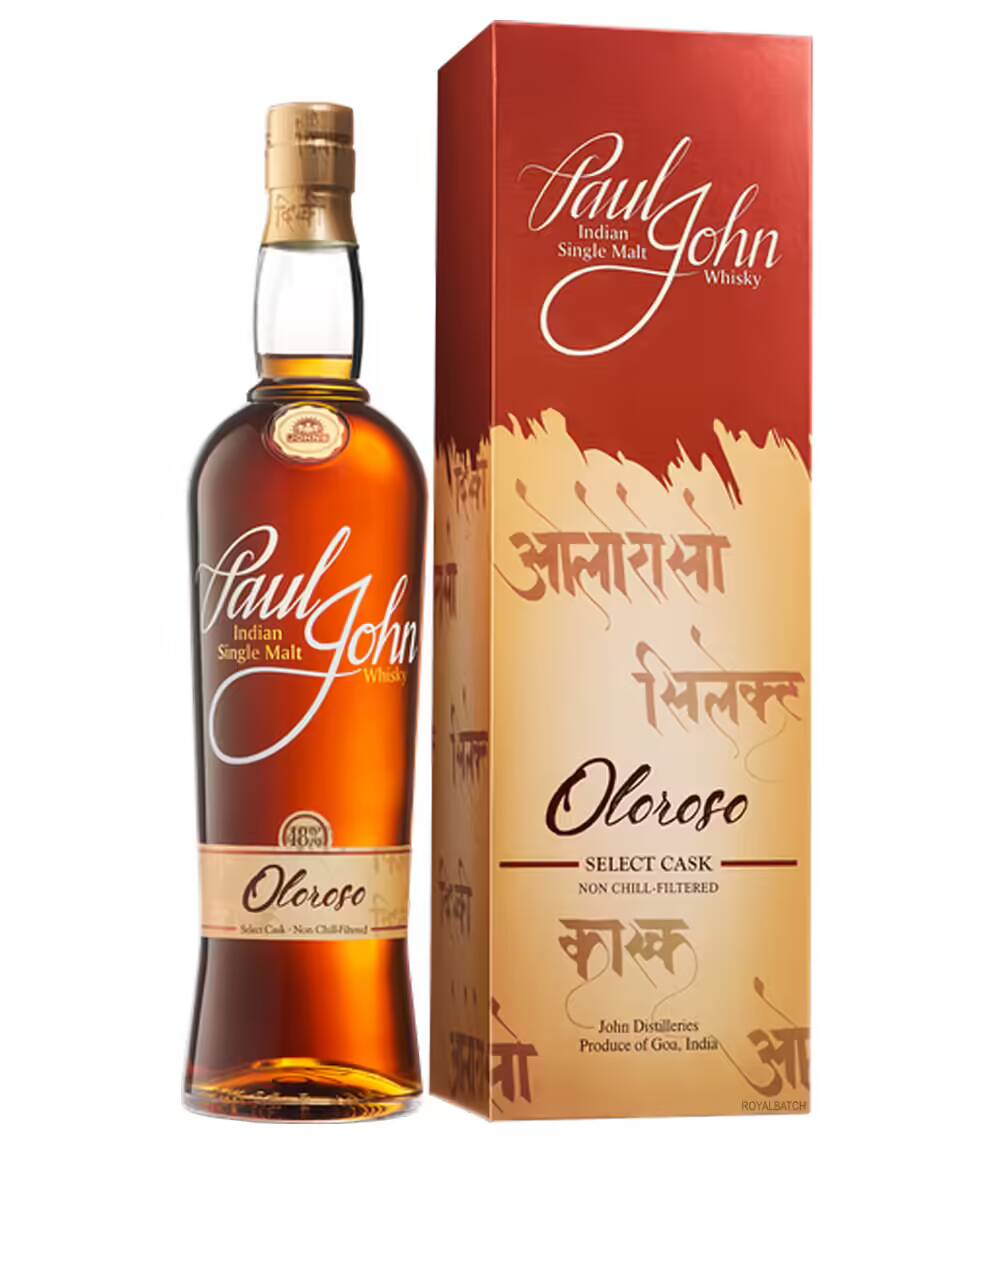 Paul John Oloroso Indian Single Malt Whisky